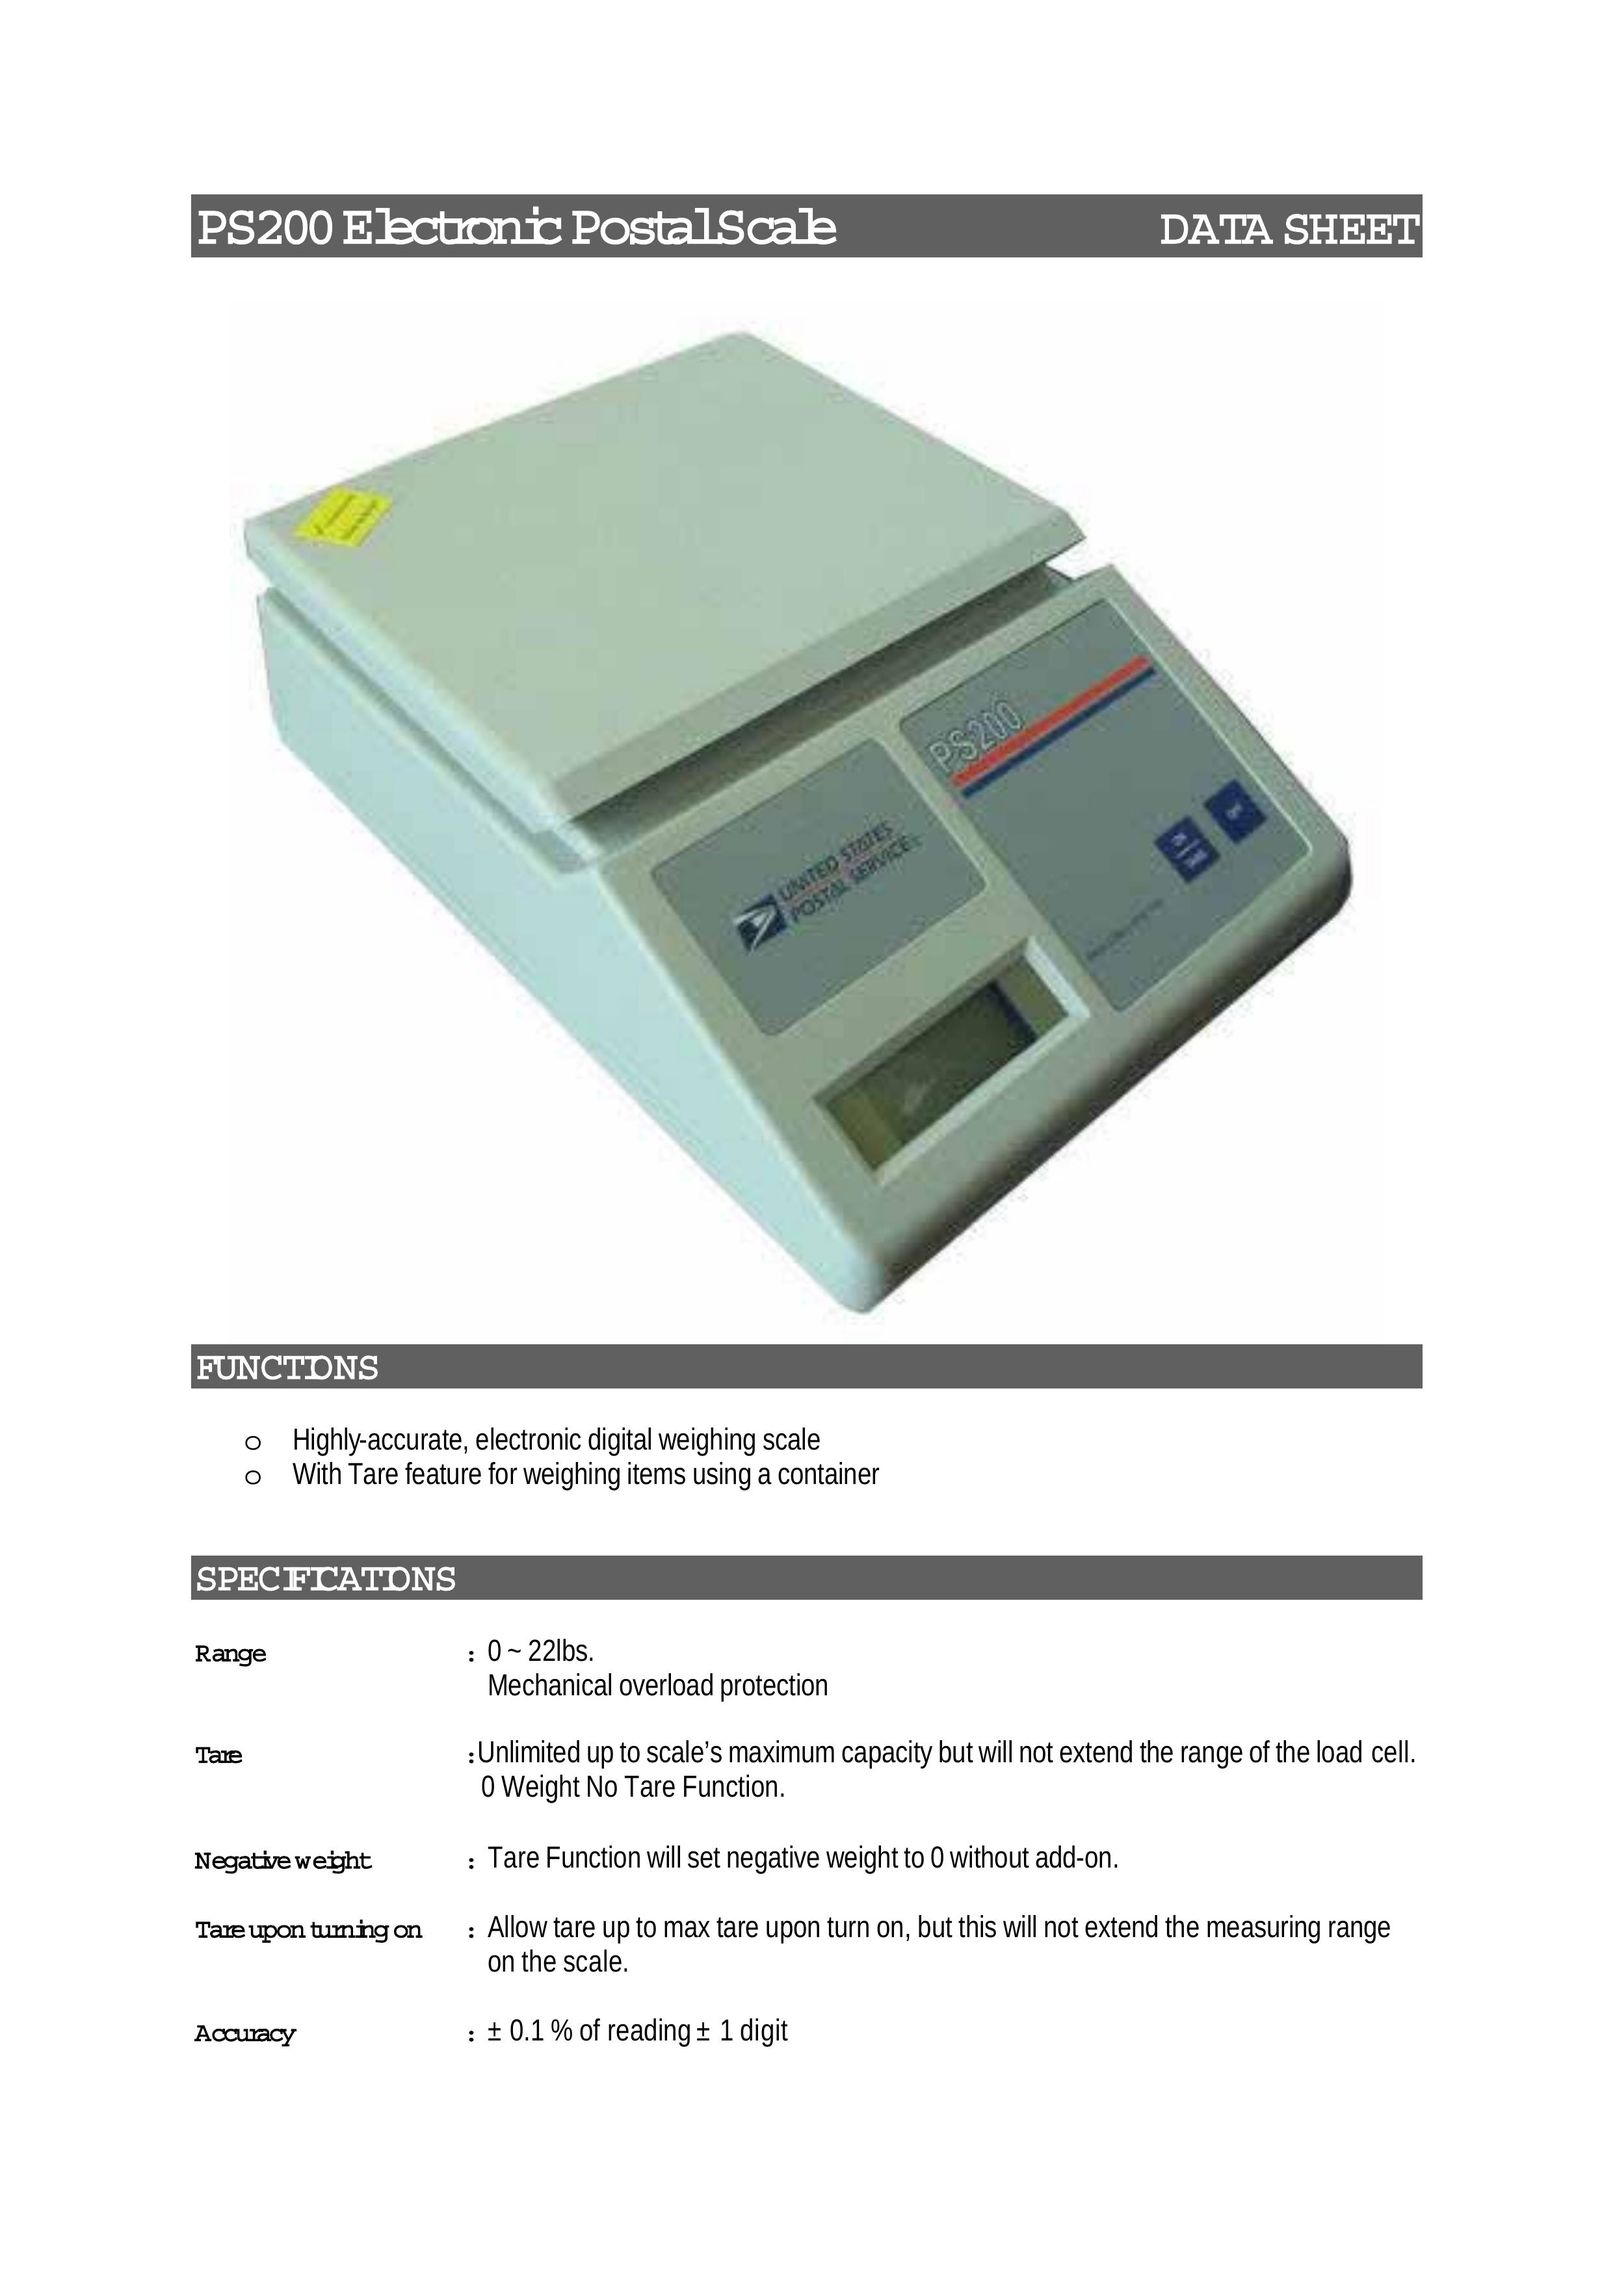 Radio Shack PS200 Postal Equipment User Manual